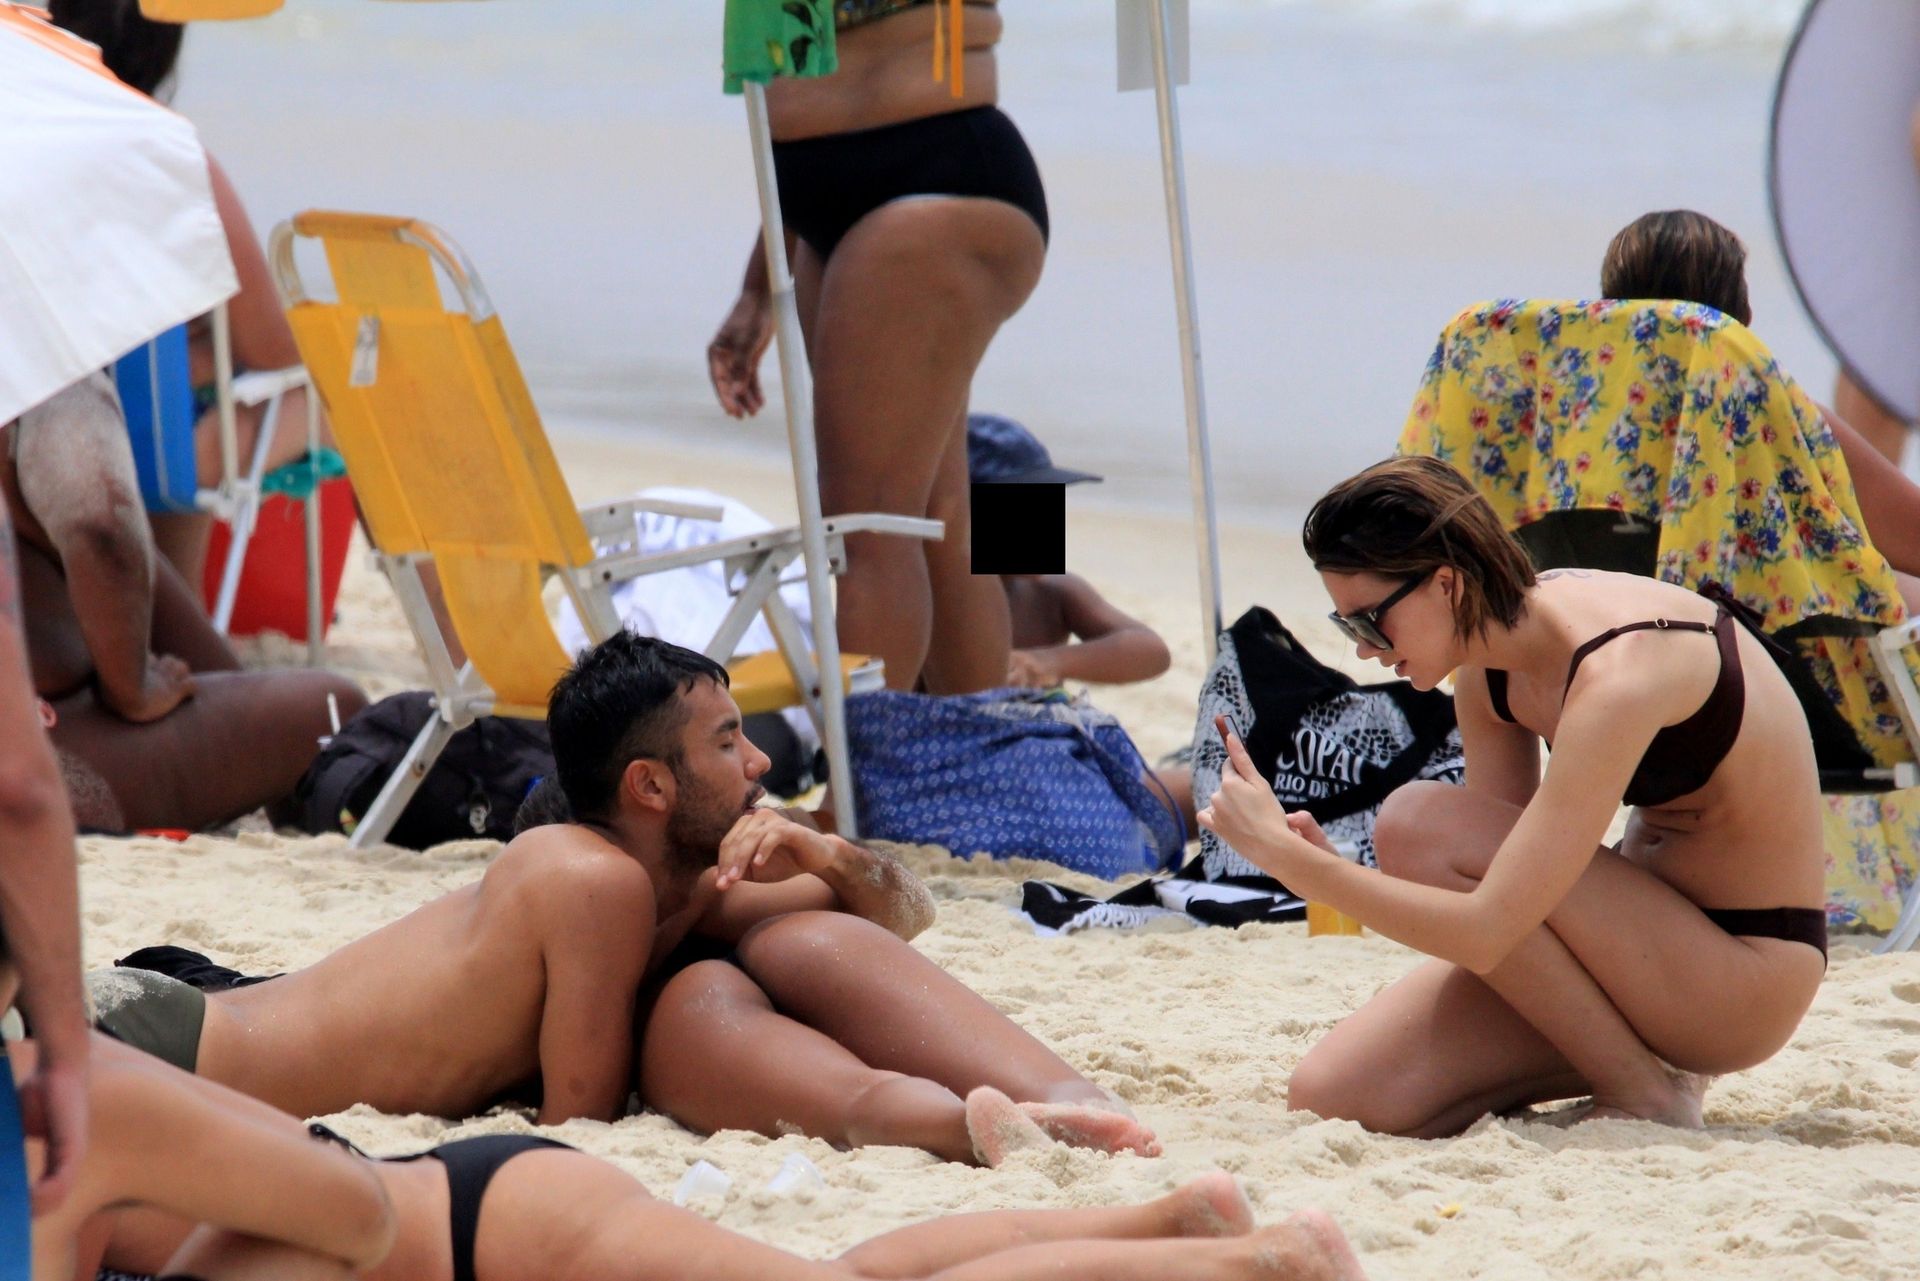 Sexy Tina Kunakey Enjoys Her Vacation In Rio De Janeiro 0052